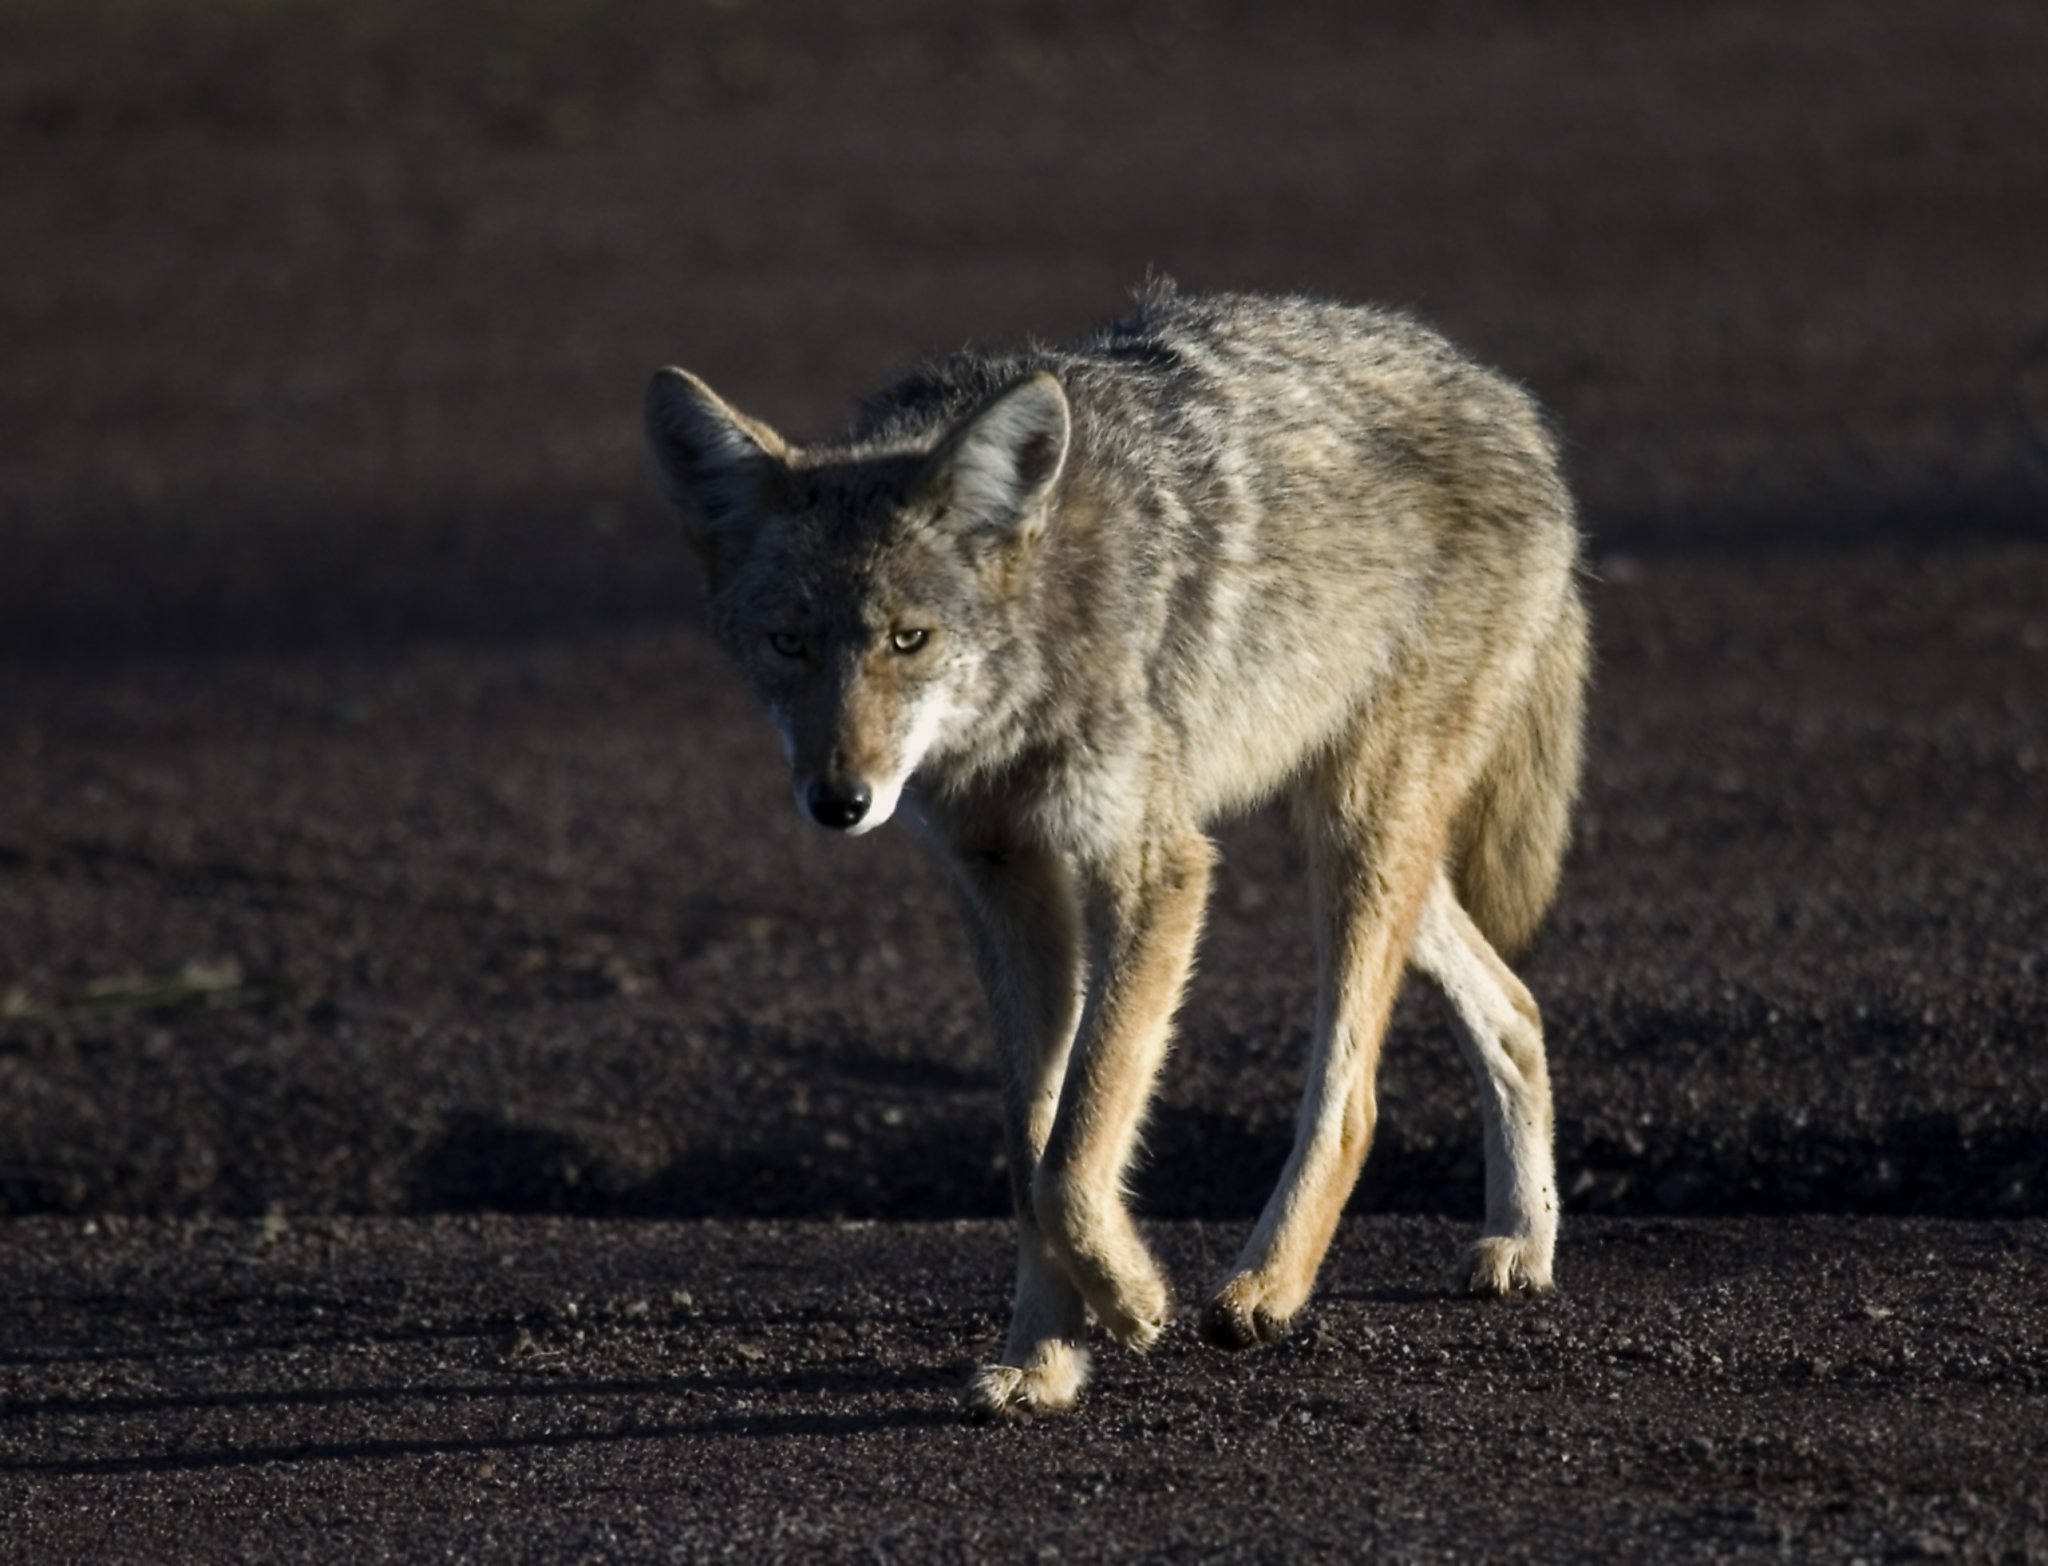 Coyote hunt brings chorus of protest